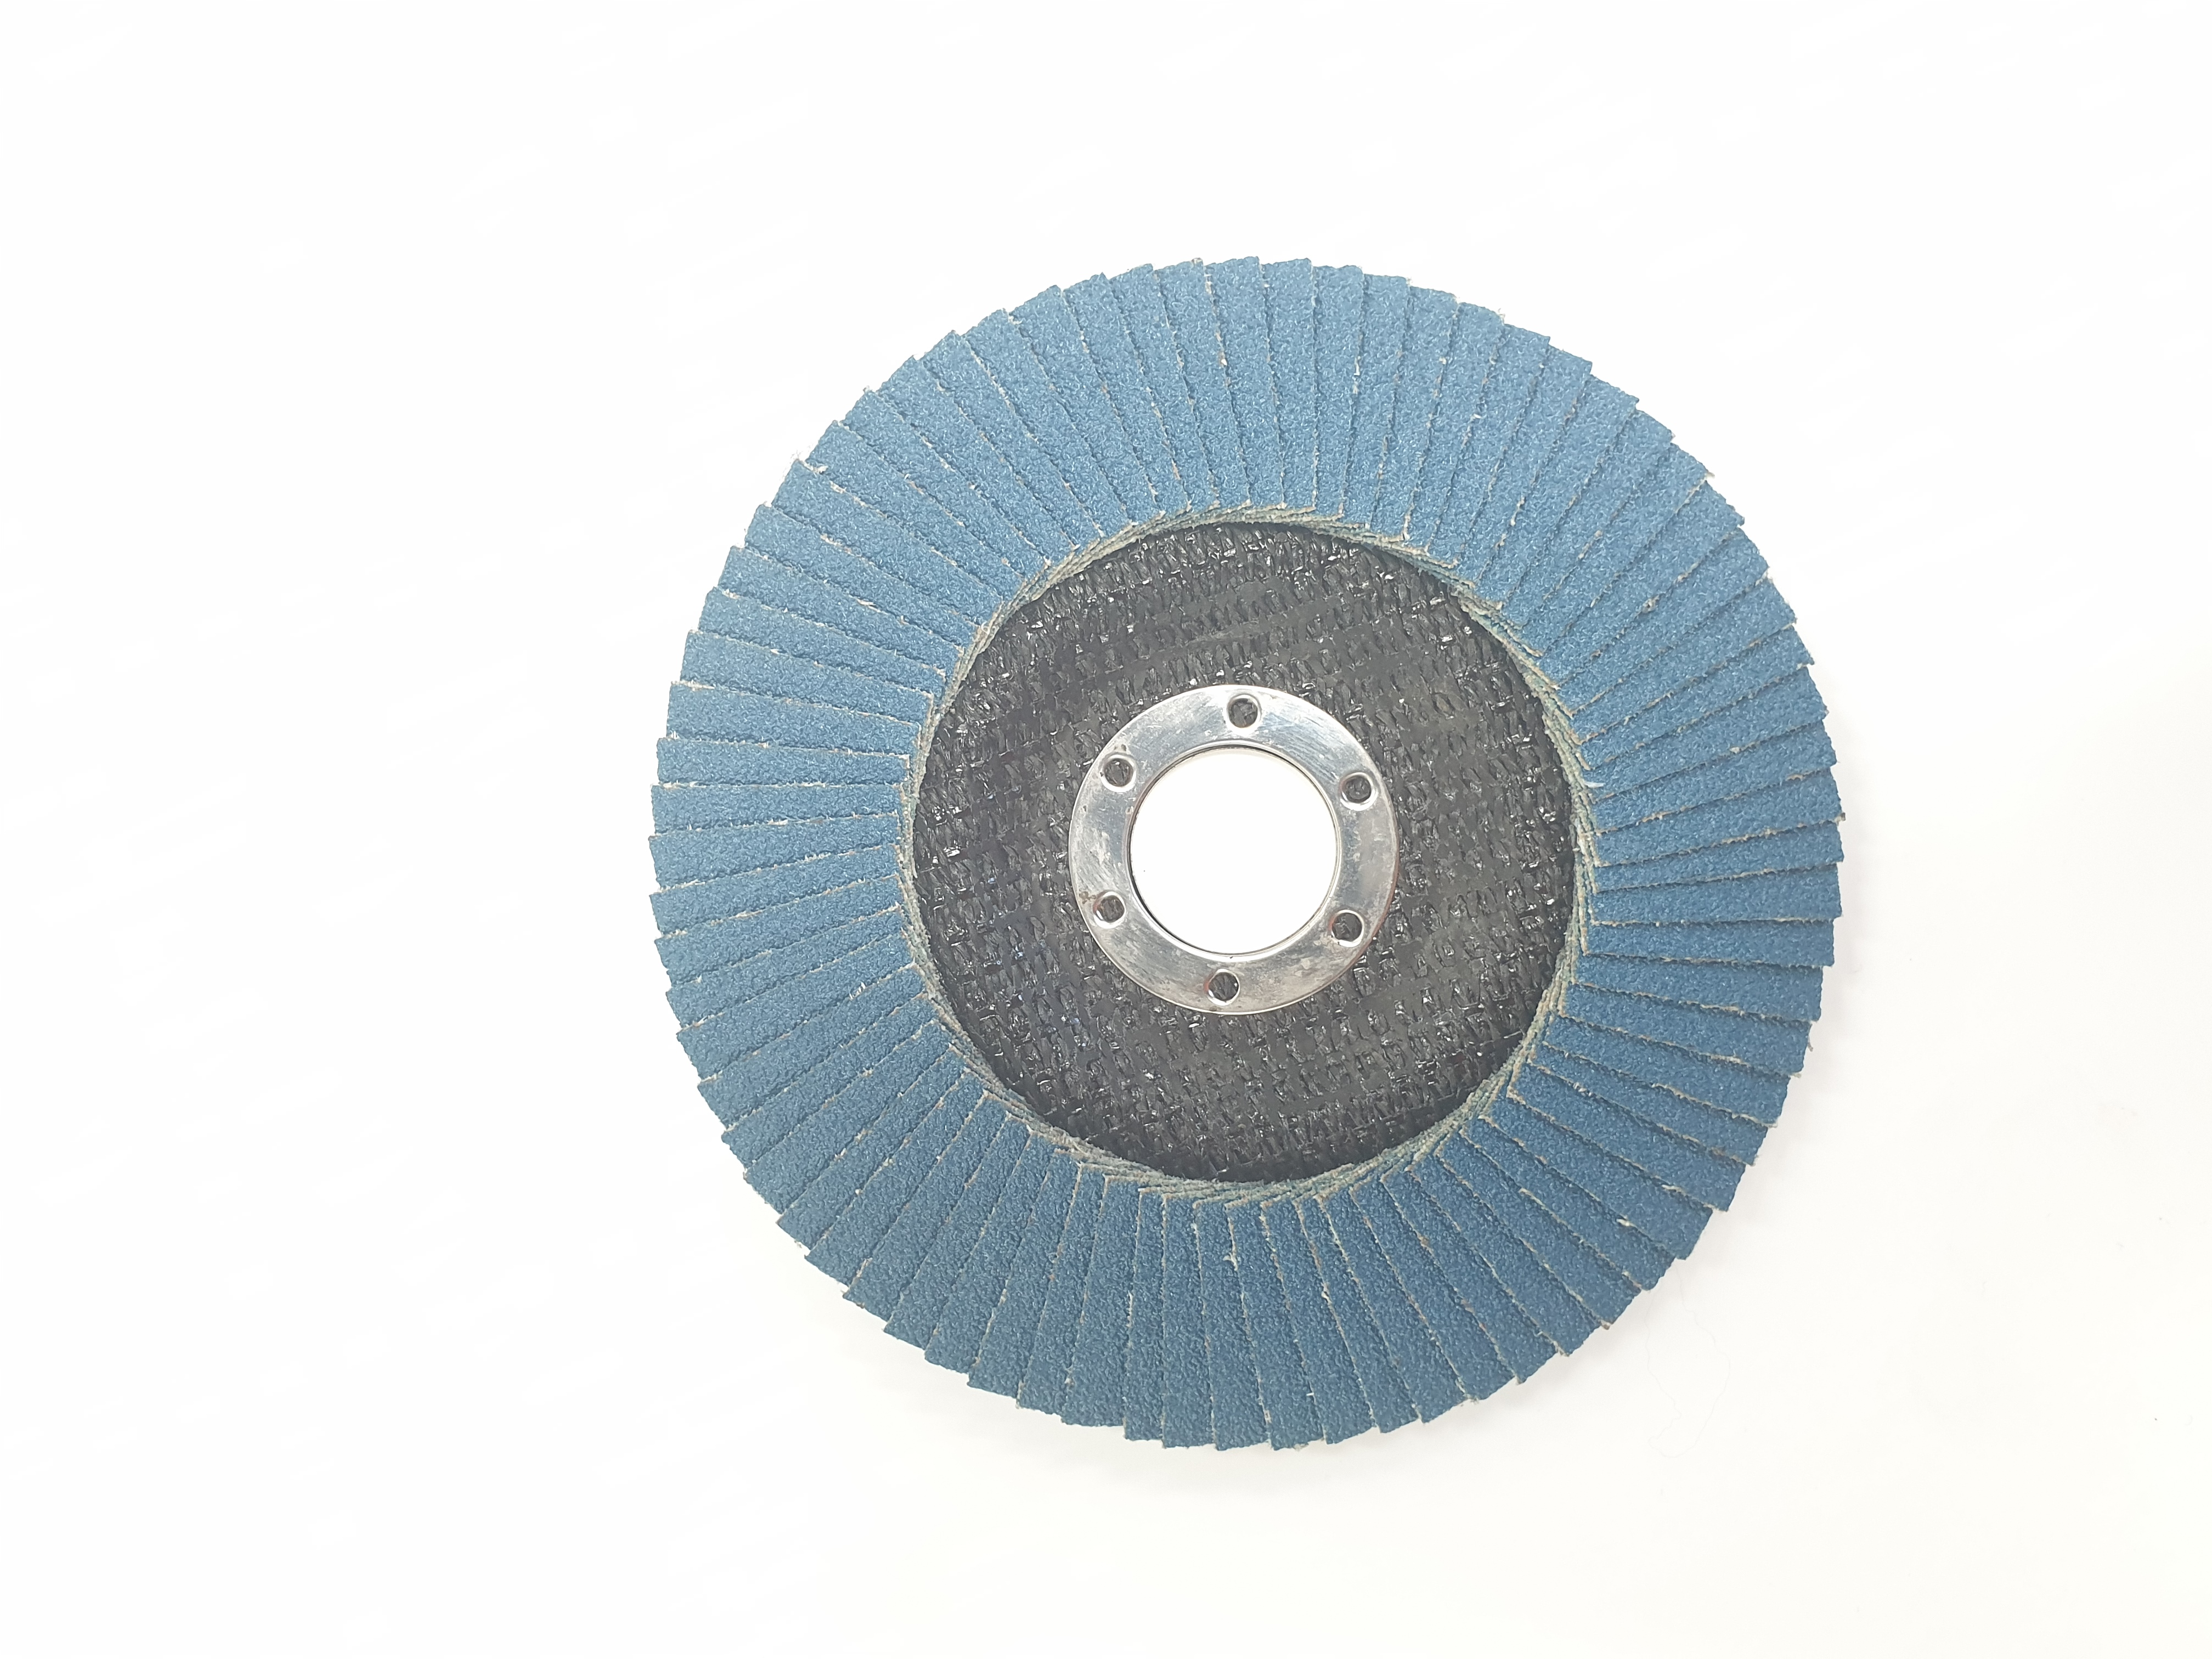 INFDZ12560- 125 x 22mm - 60 Grit Zirconium Flap Disc